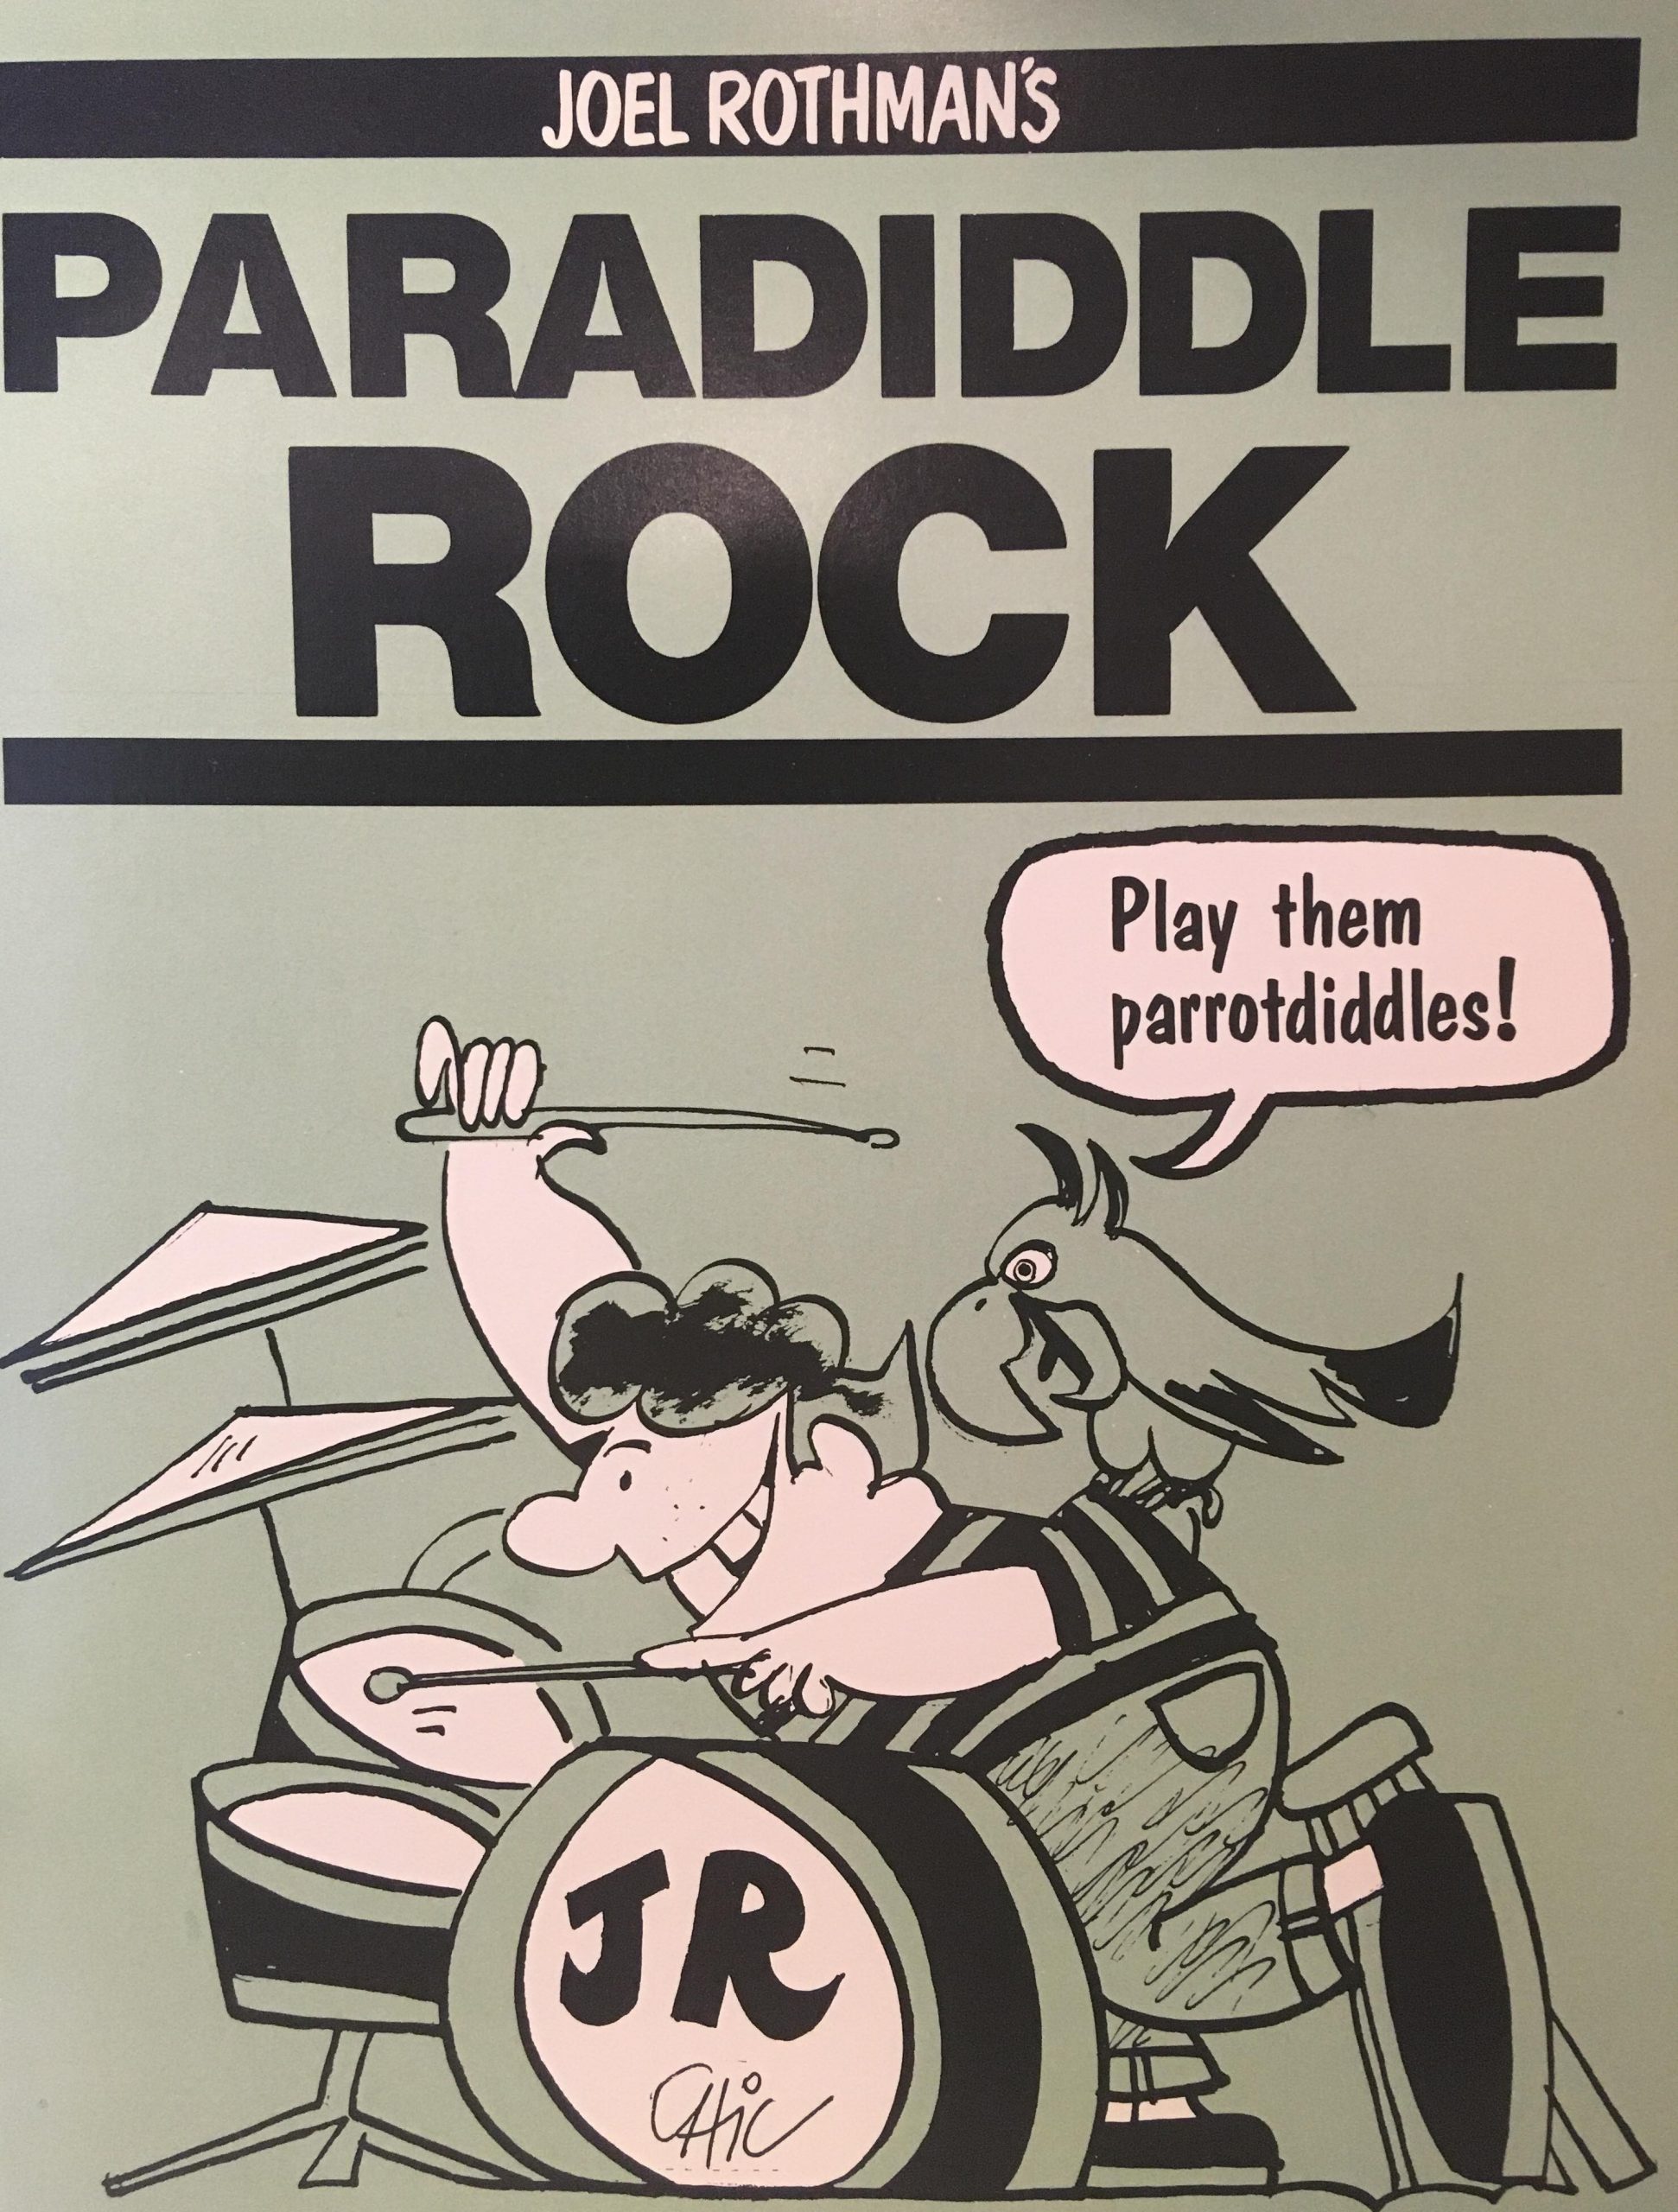 Paradiddle Rock by Joel Rothman